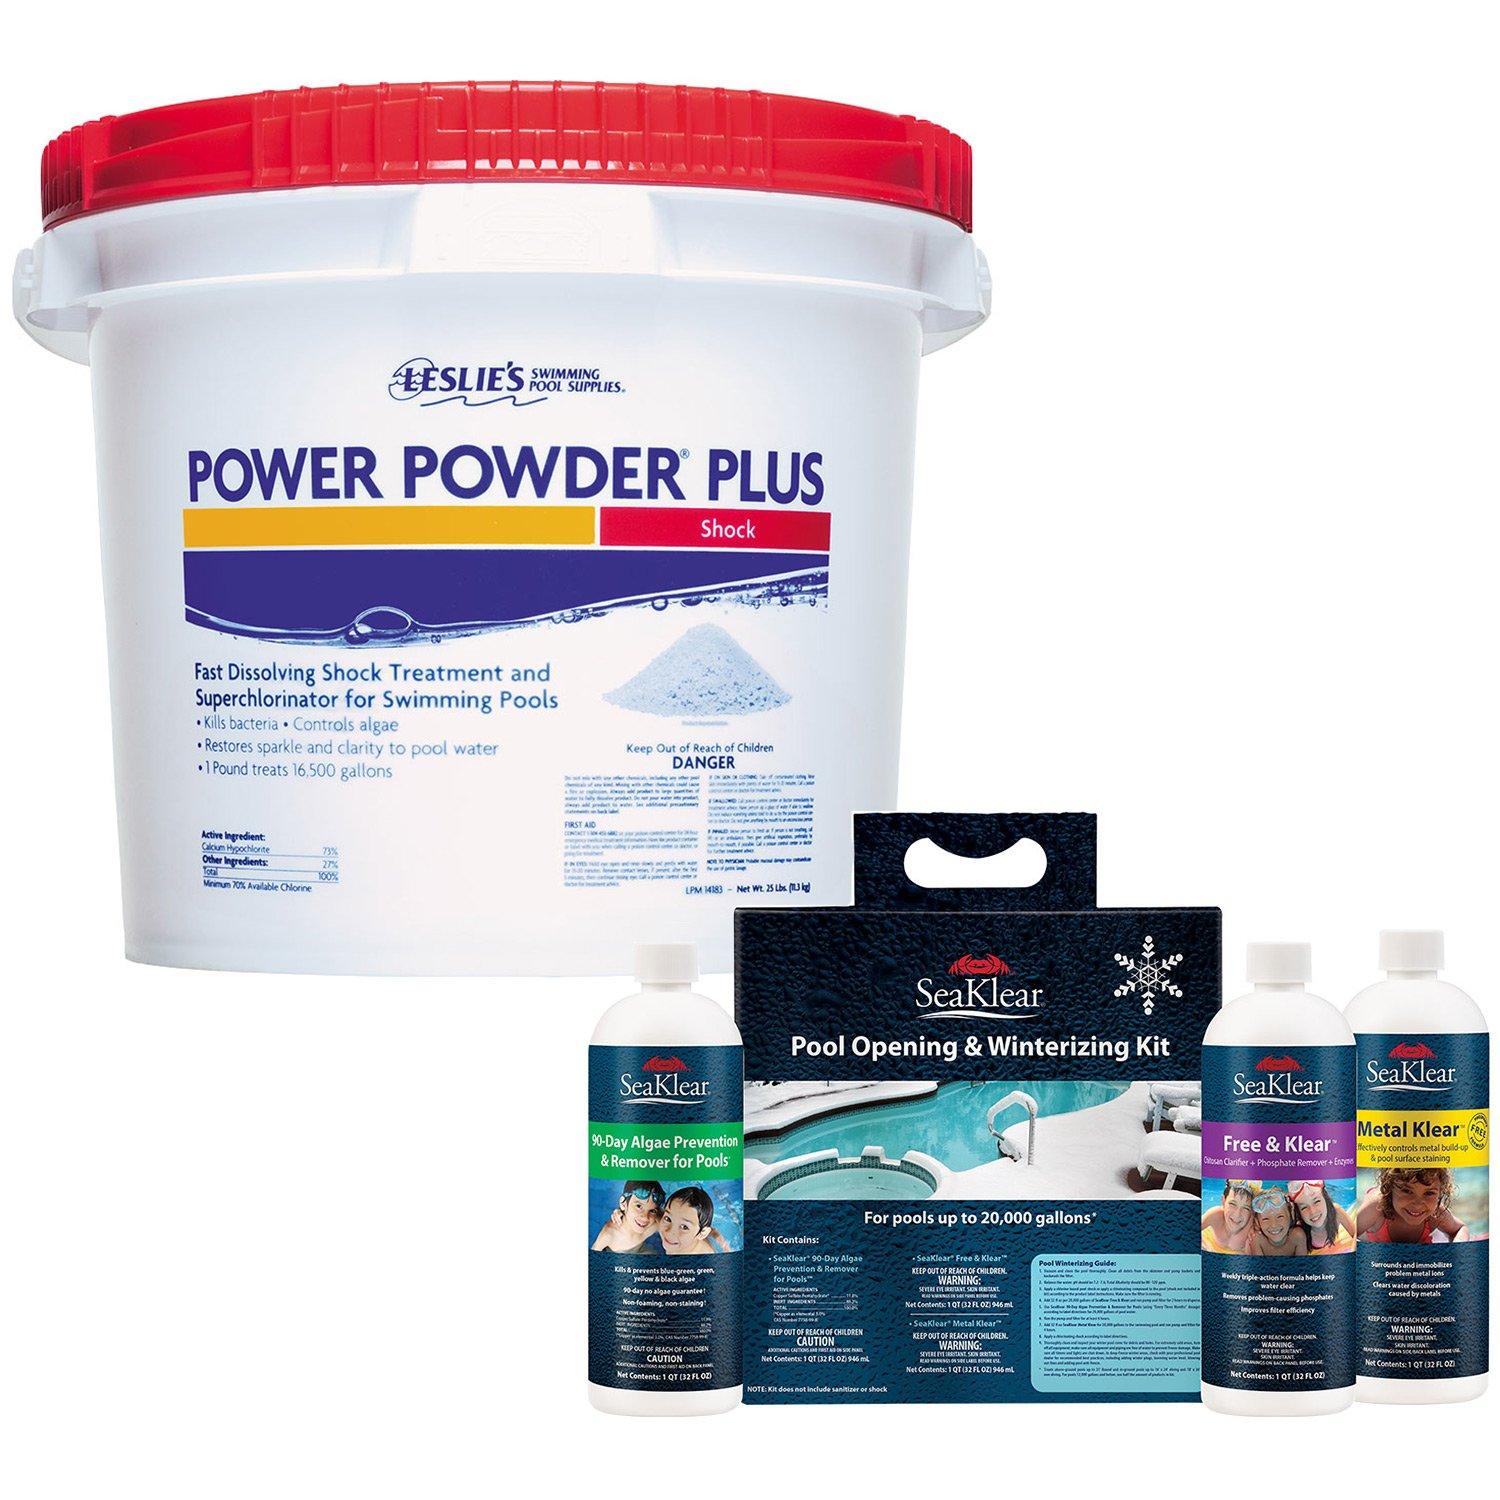 Leslie's  Power Powder Plus Pool Shock 25 lbs with FREE SeaKlear Pool Opening  Winterizing Kit